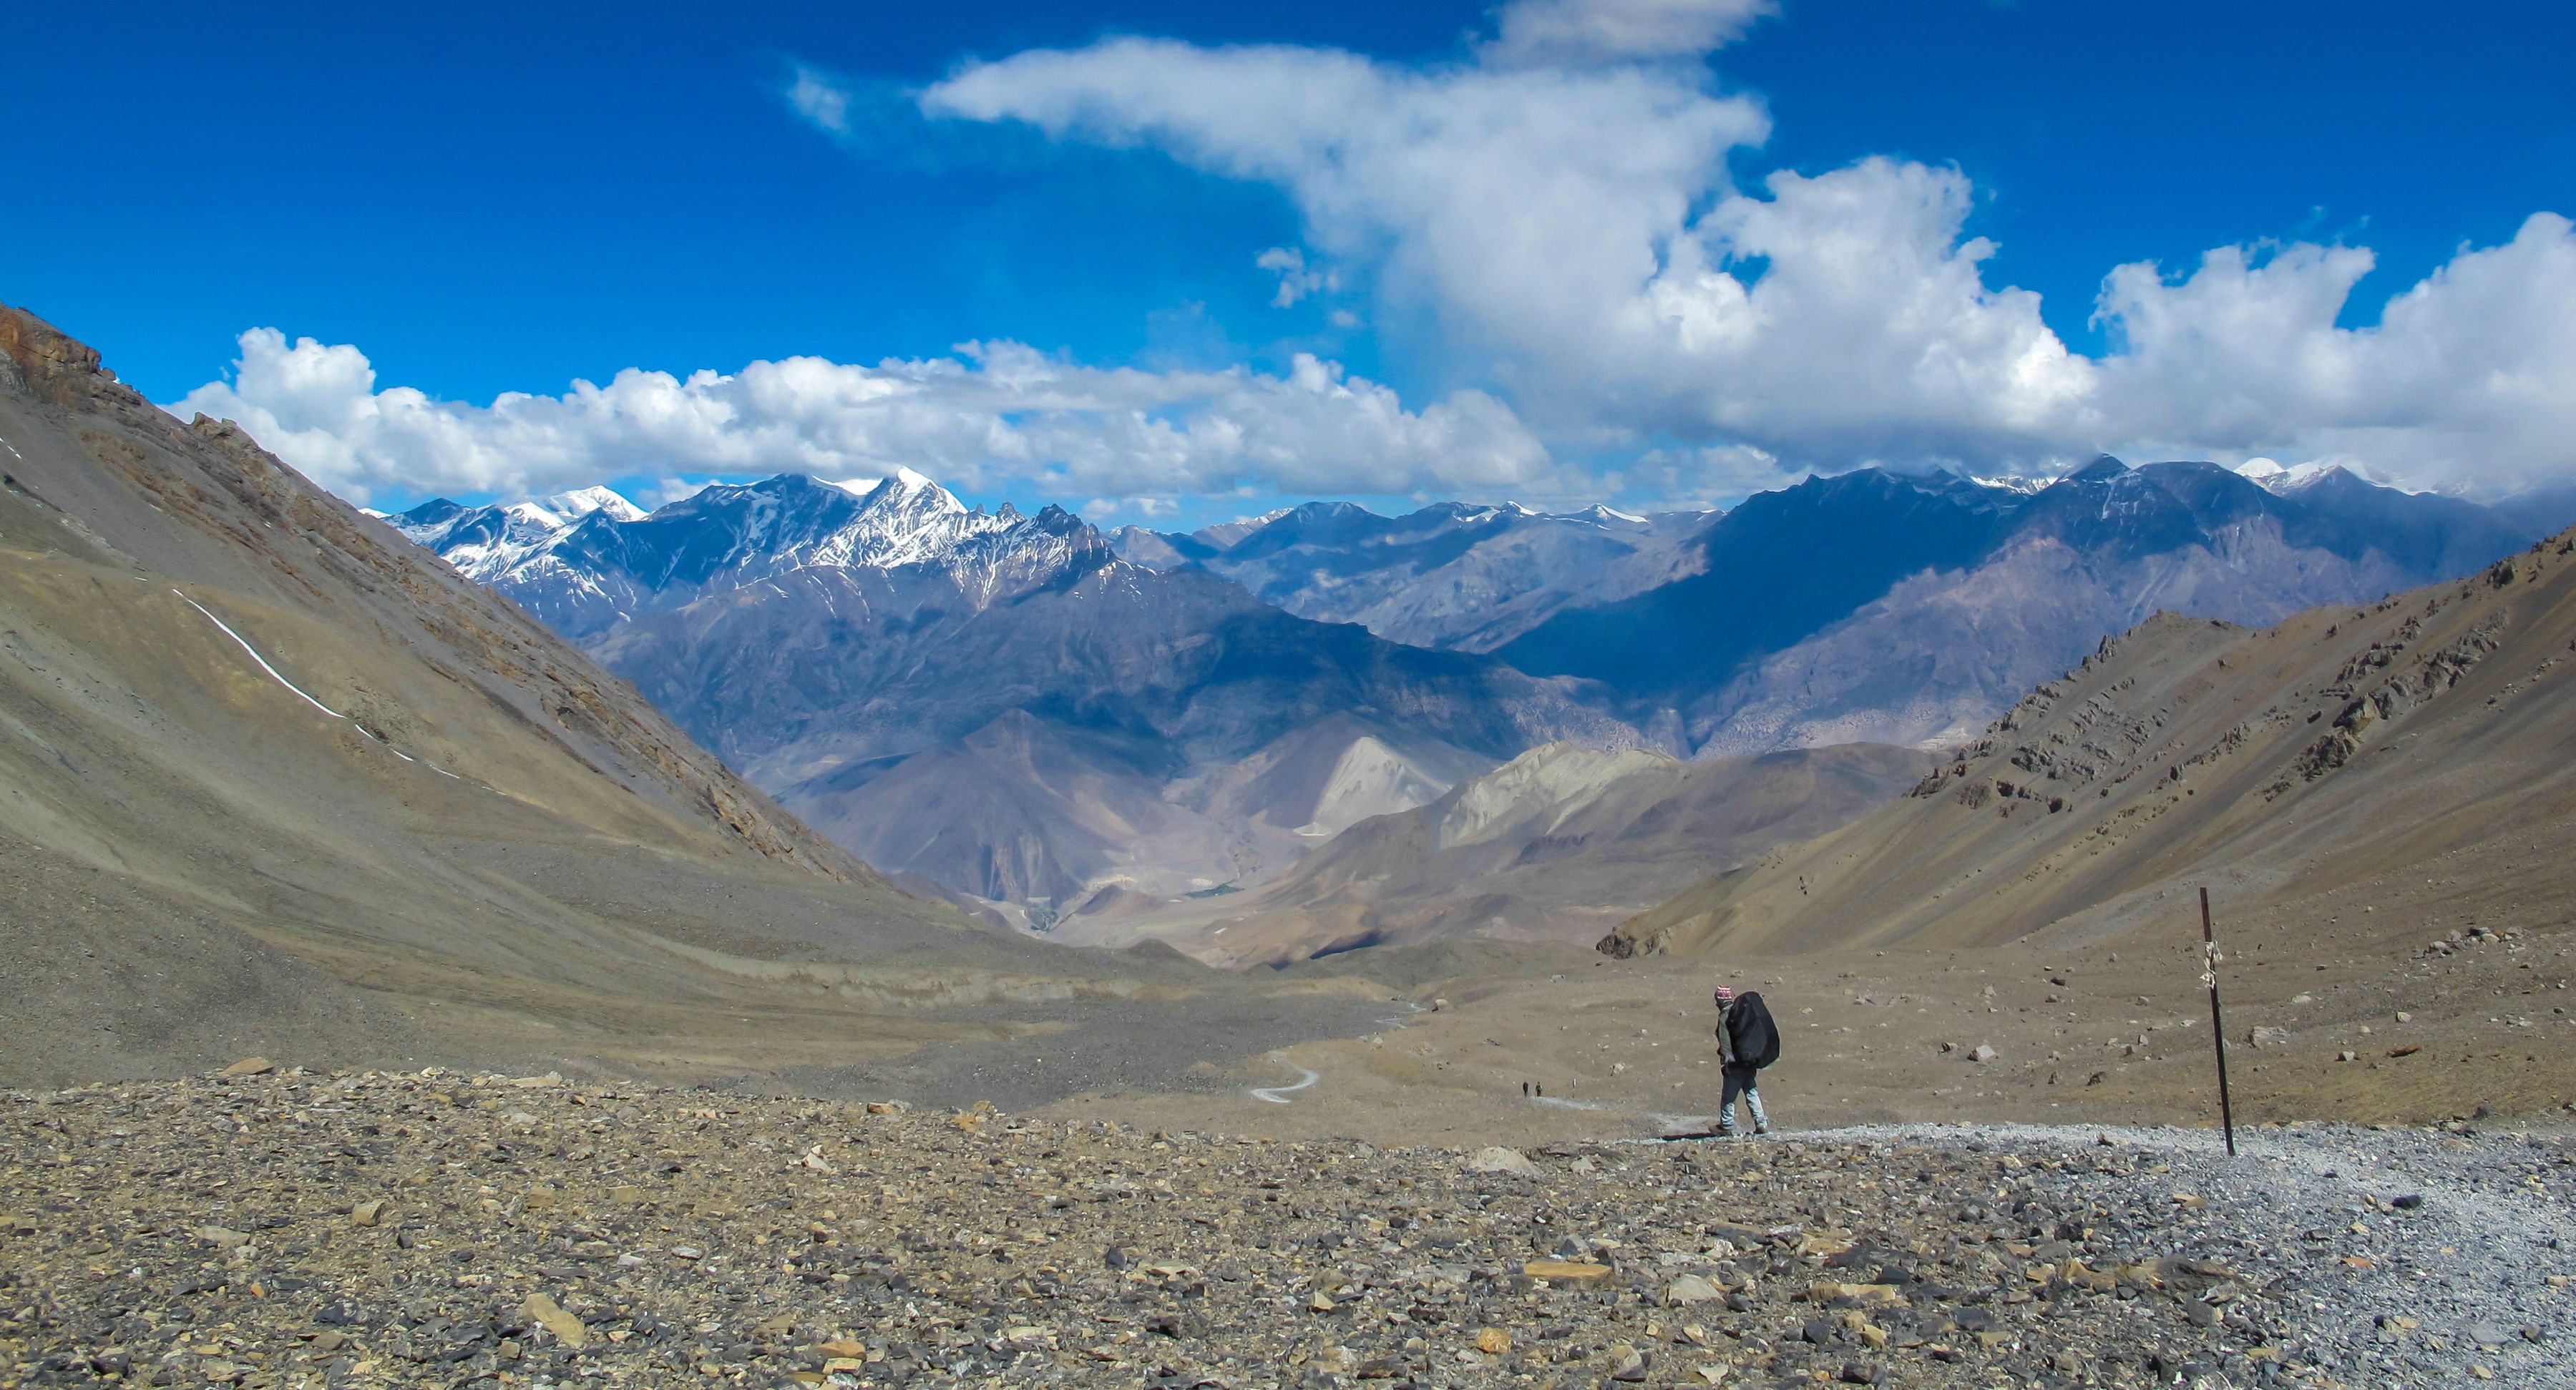 Himalayas mountains in Nepal. Annapurna circuit. Backpacker is walking in Himalayas mountains